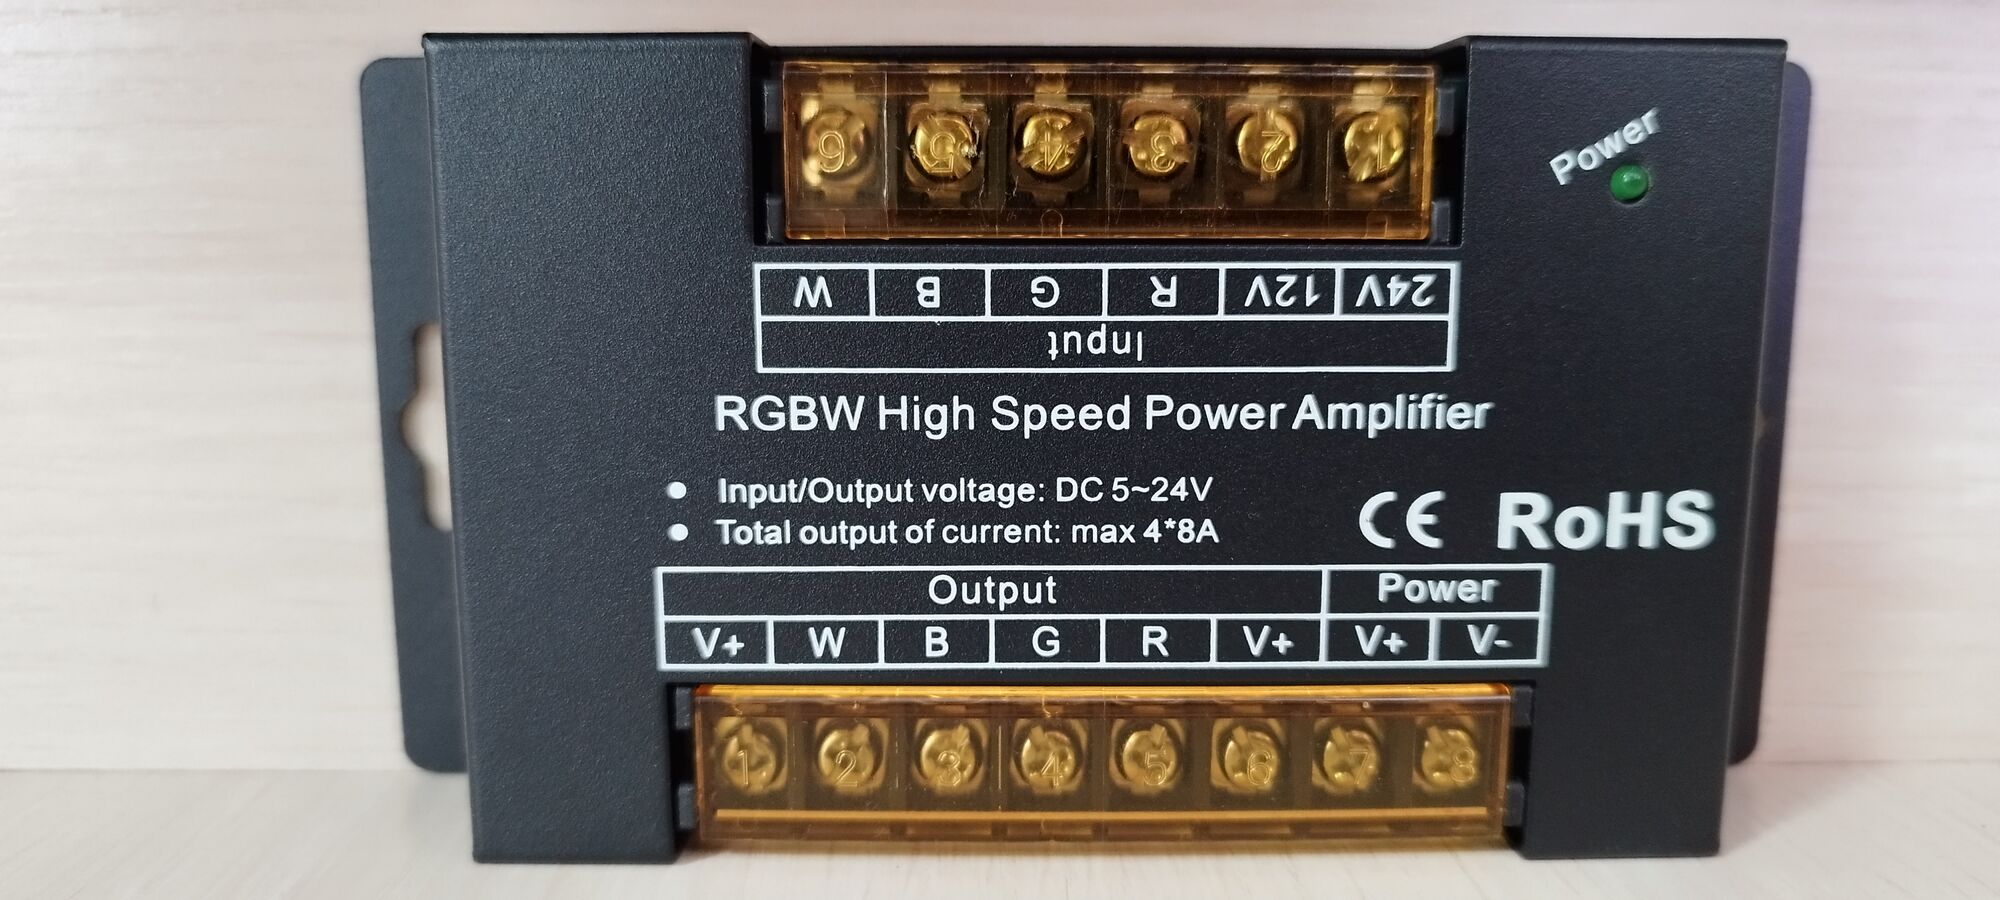 Усилитель RGB+W 5-24V, 32A 1